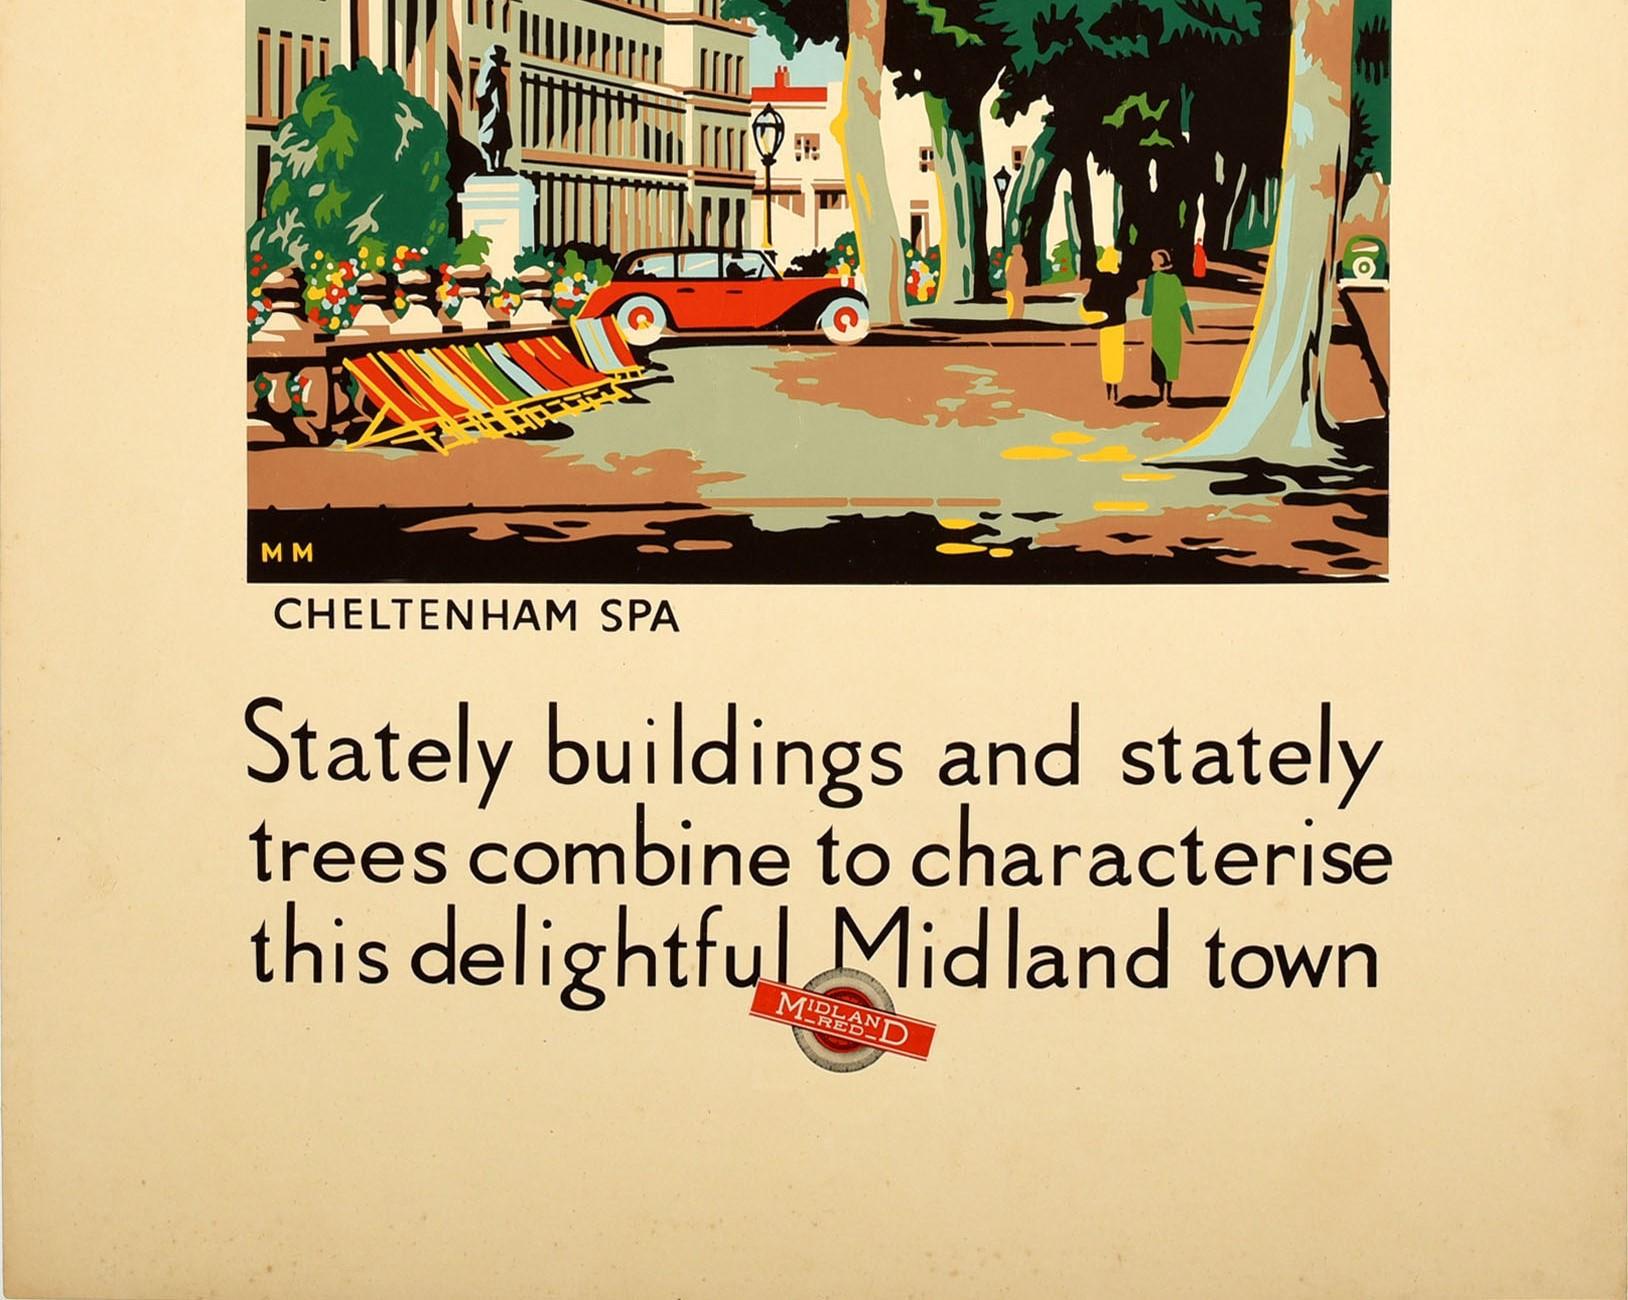 Art Deco Original Vintage Travel Poster Cheltenham Spa Stately Buildings Midland Red Bus For Sale